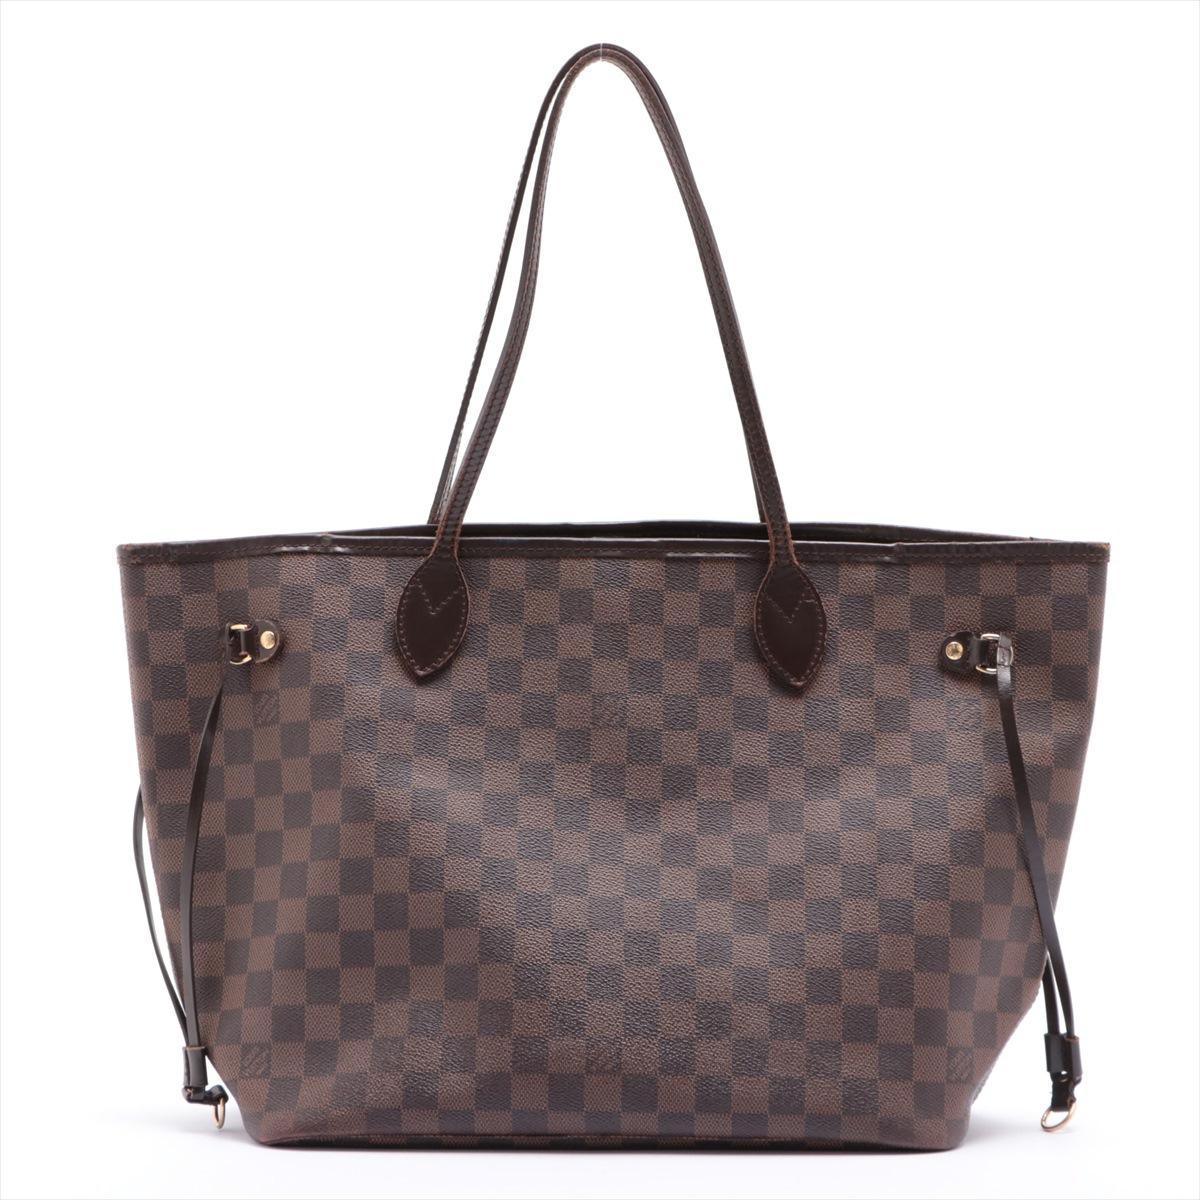 Black Louis Vuitton Damier Ebene Canvas Leather Neverfull MM Bag For Sale